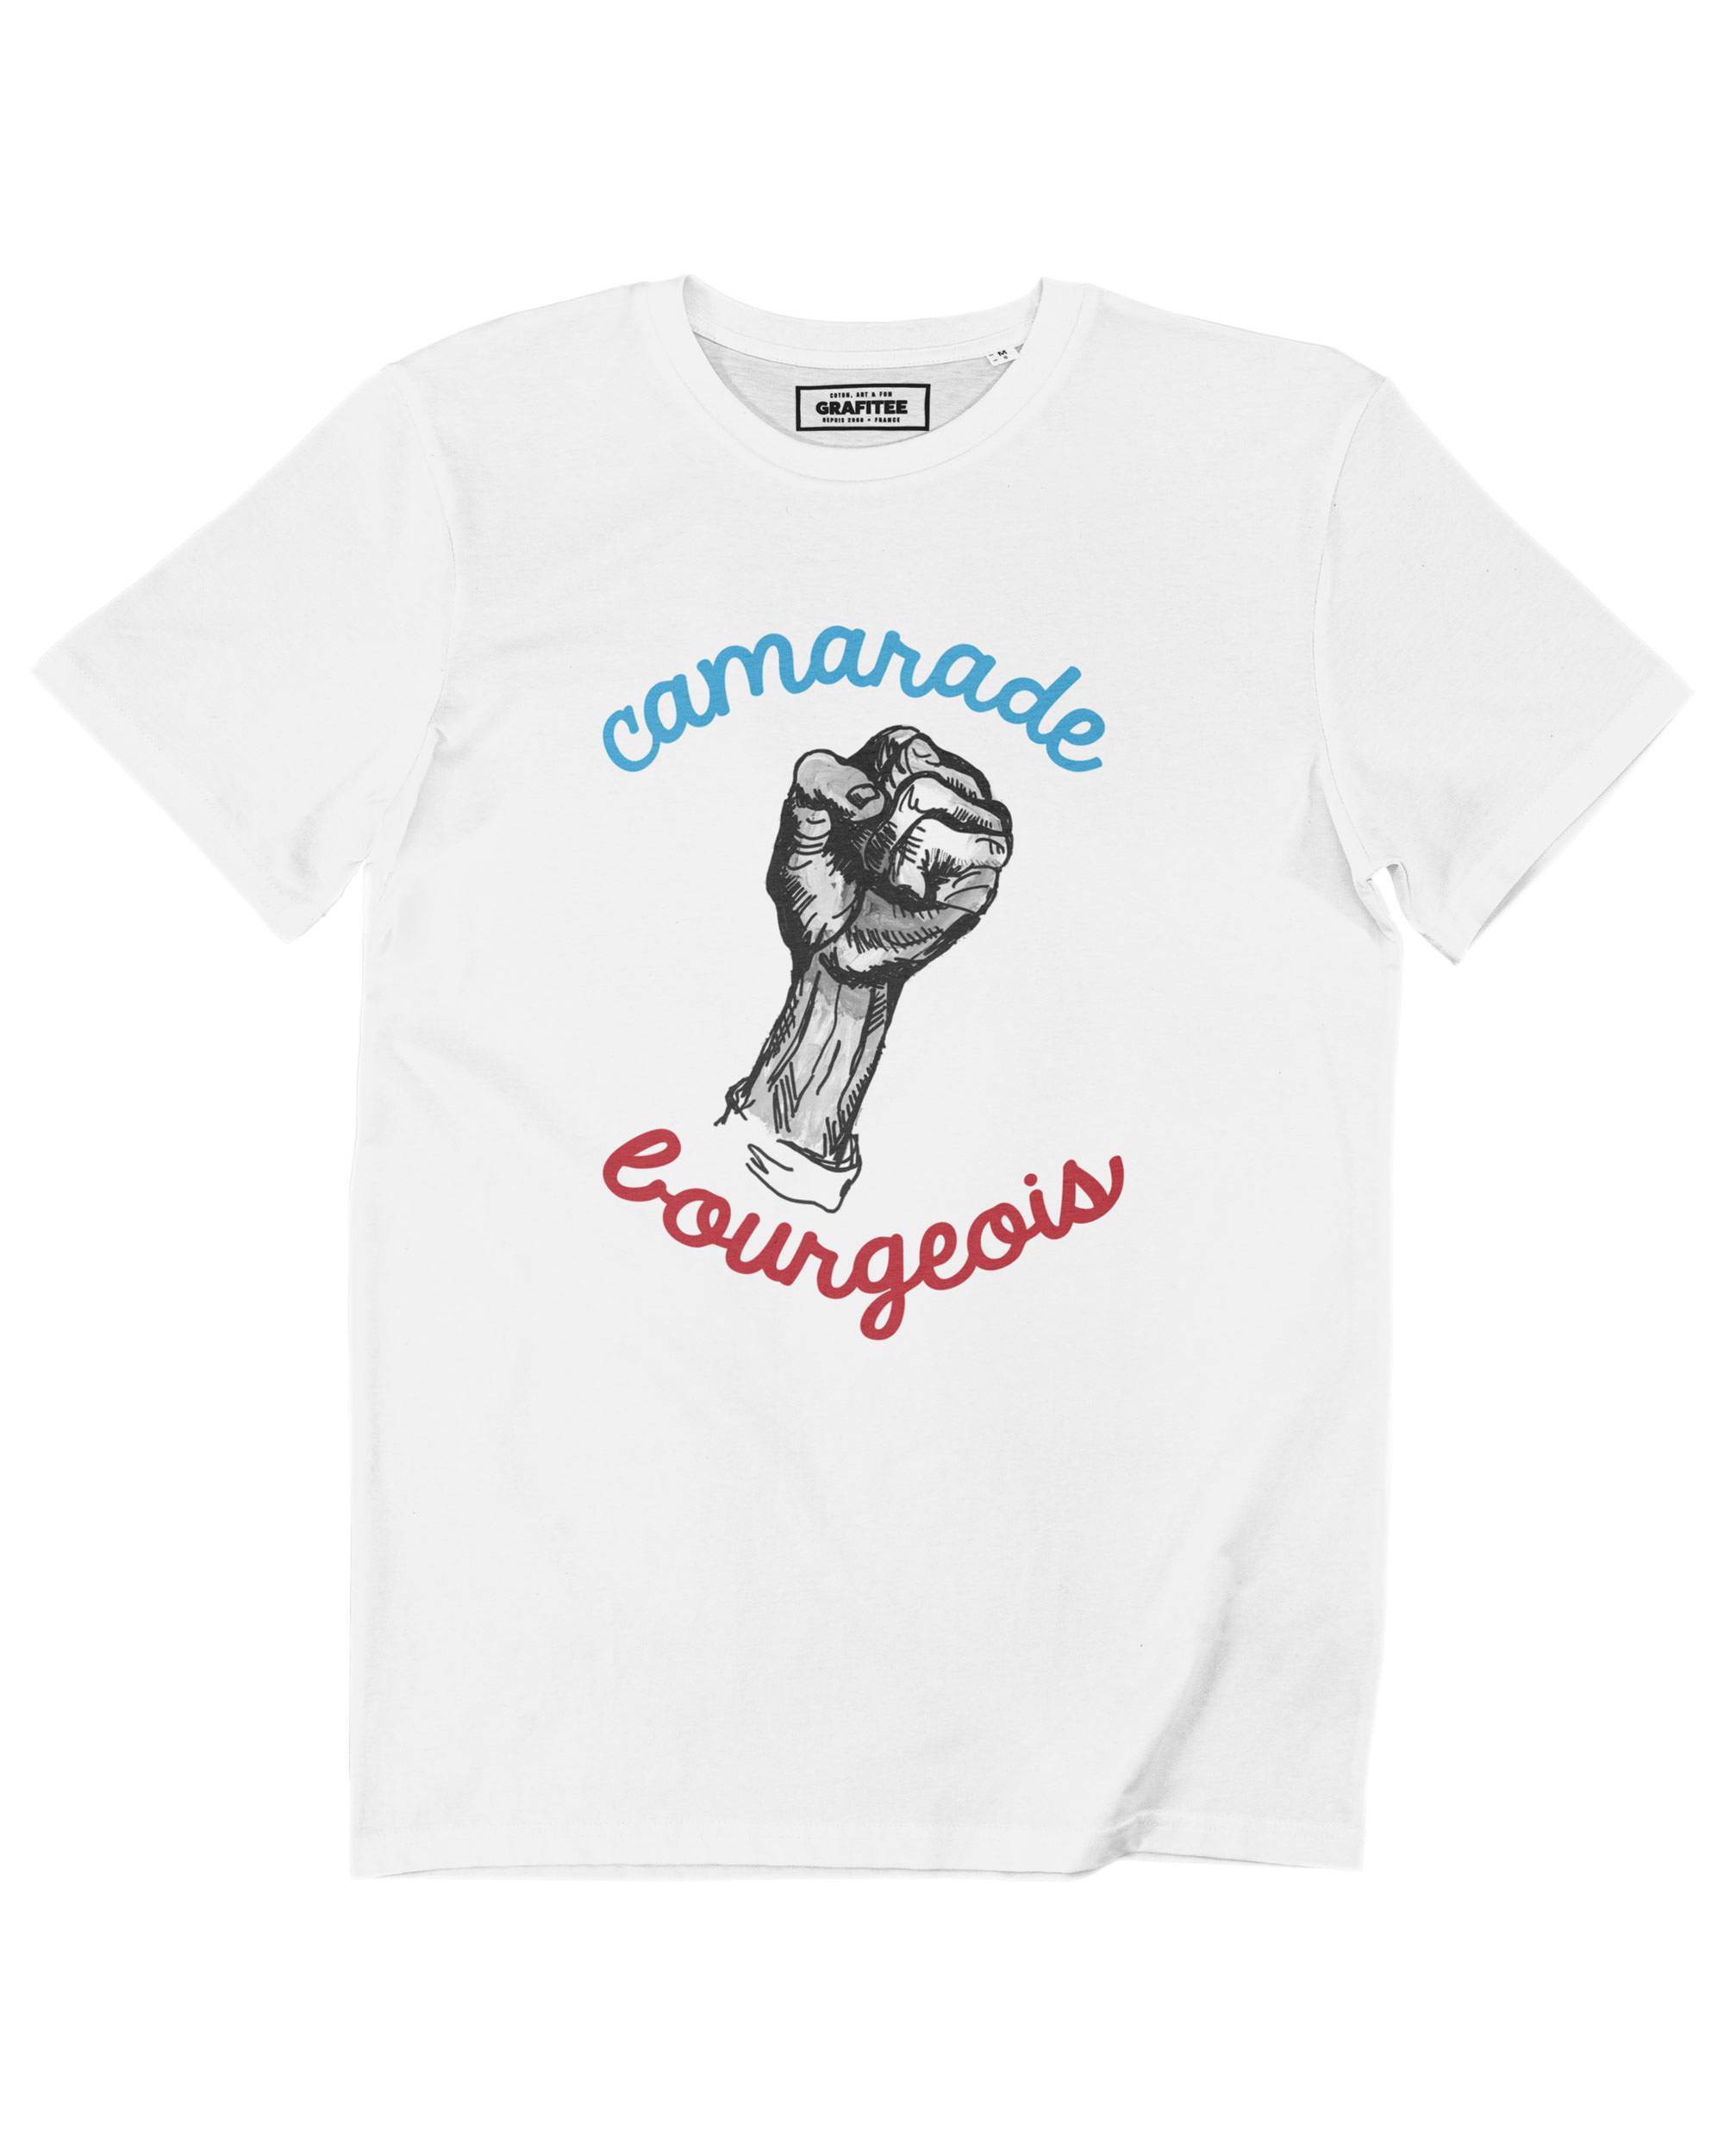 T-shirt Camarade Bourgeois Grafitee